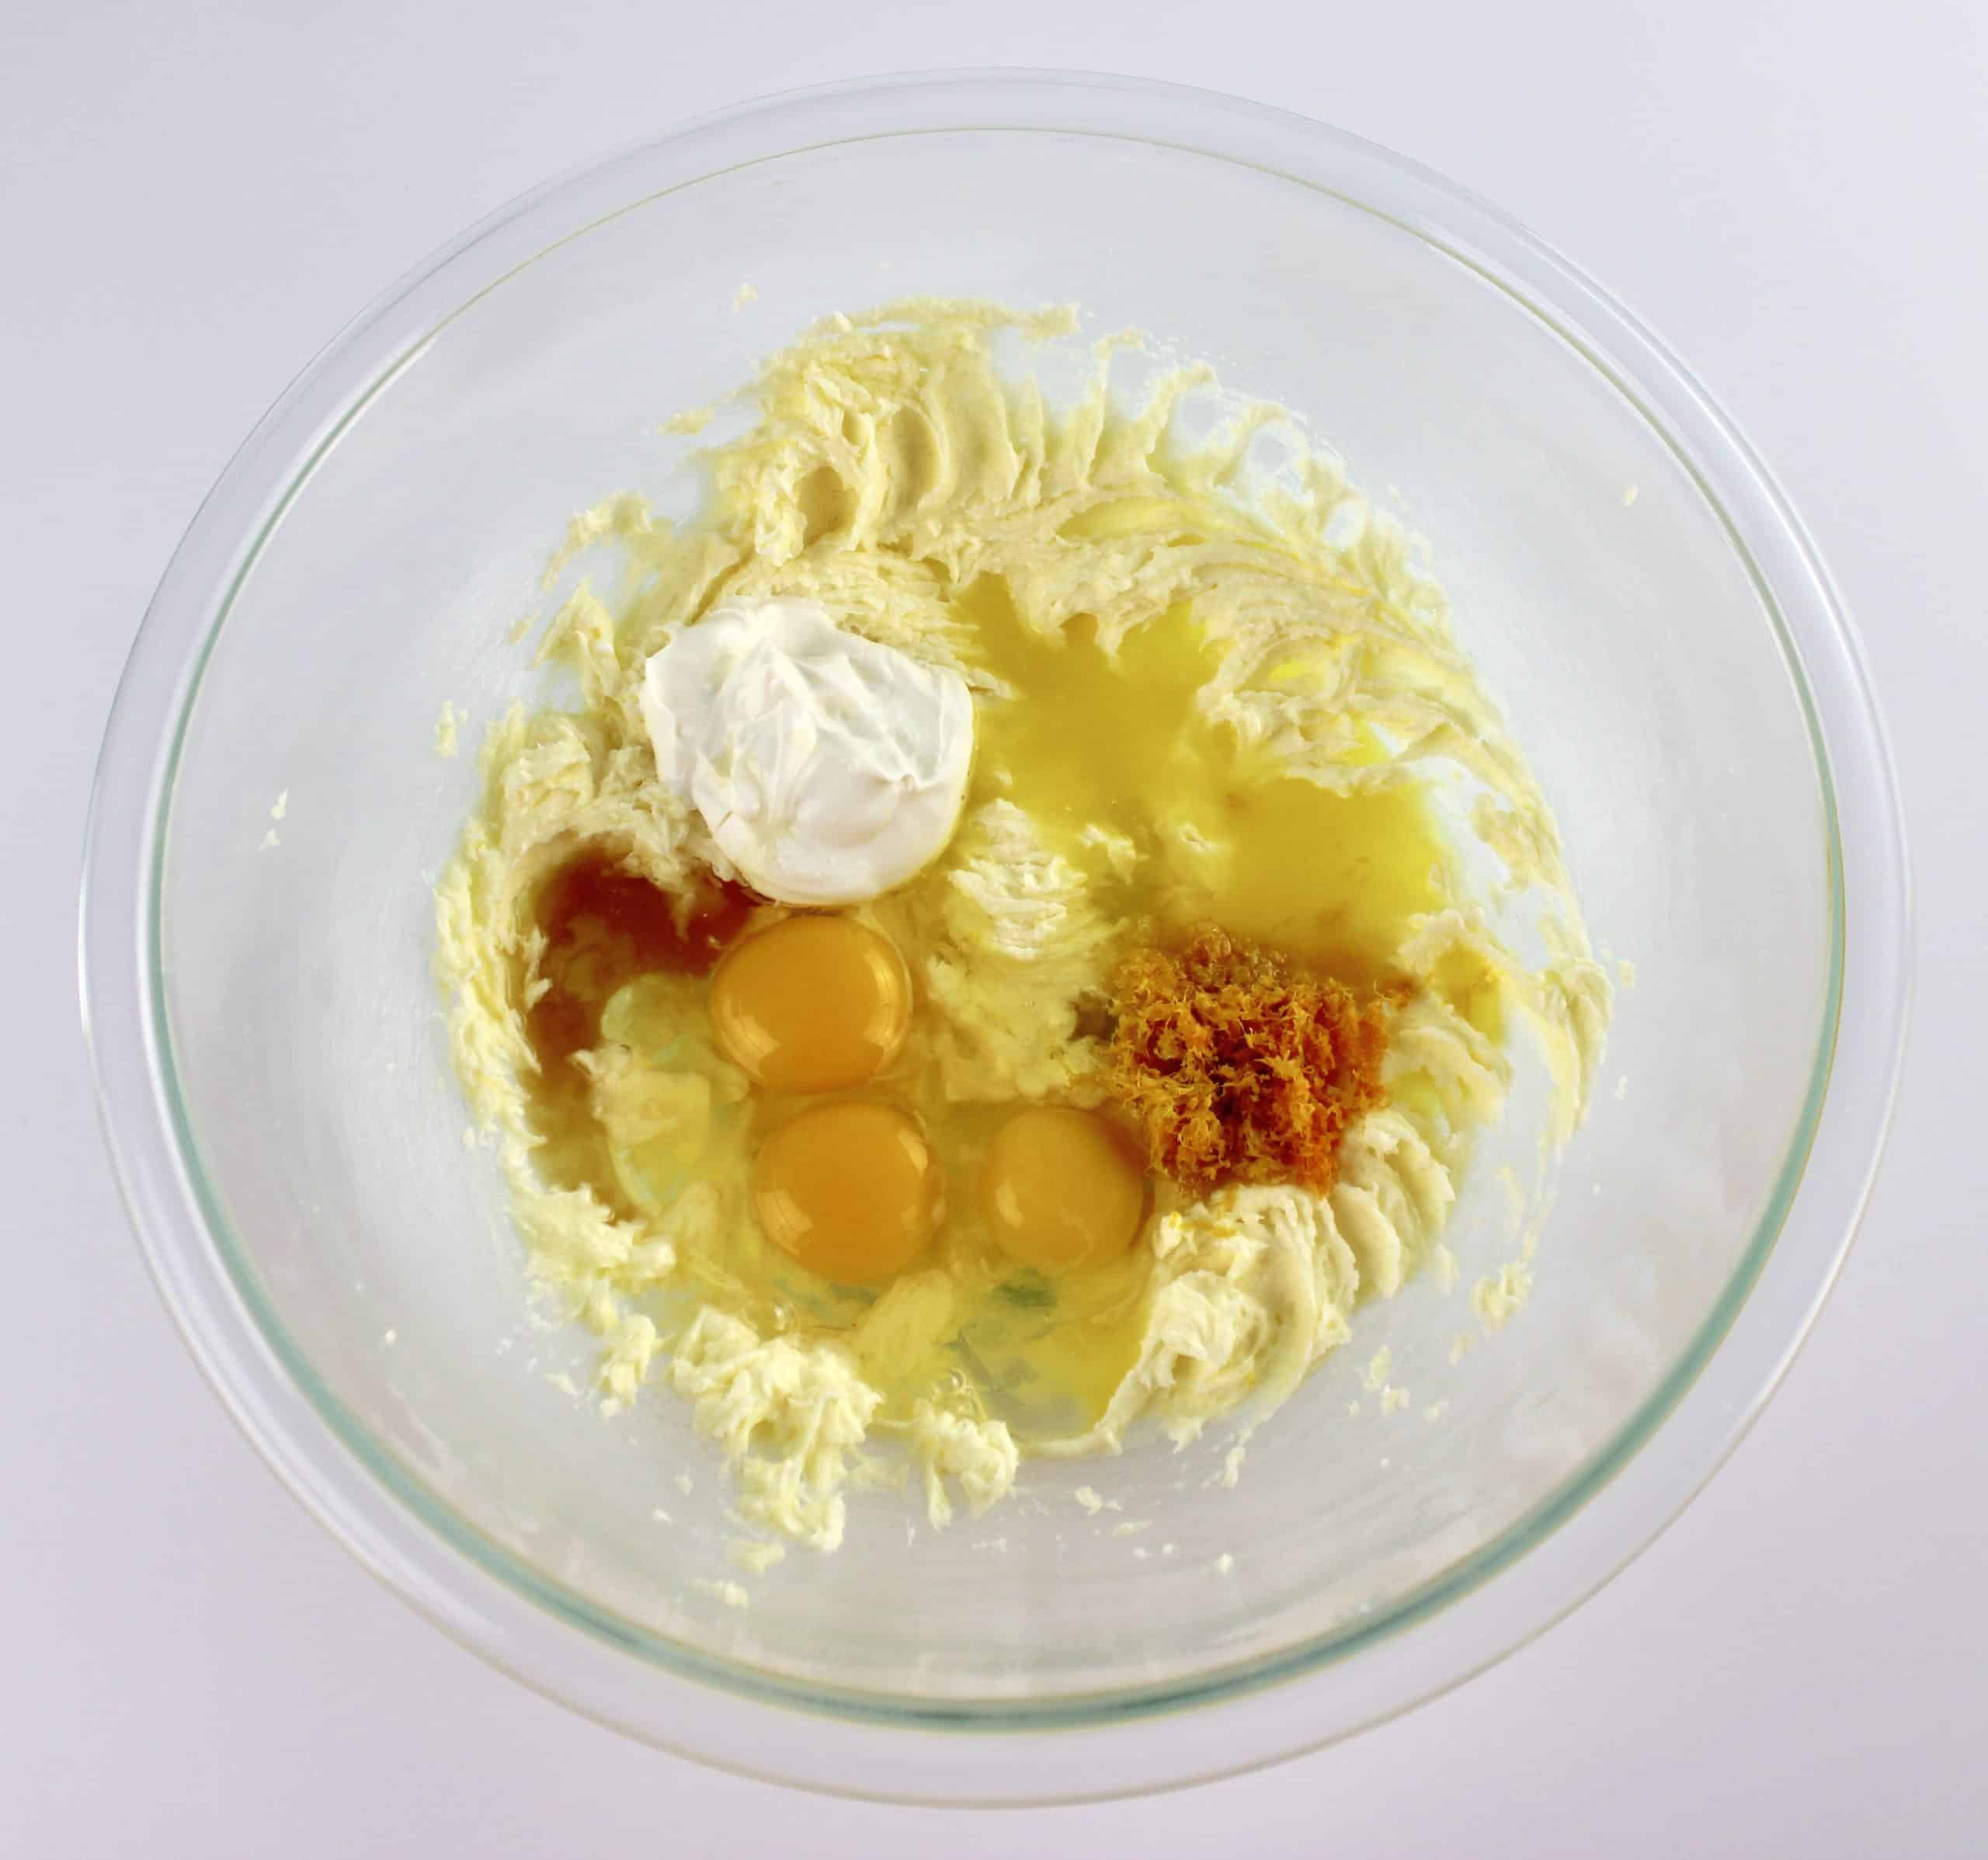 wet ingredients for orange pound cake in glass bowl